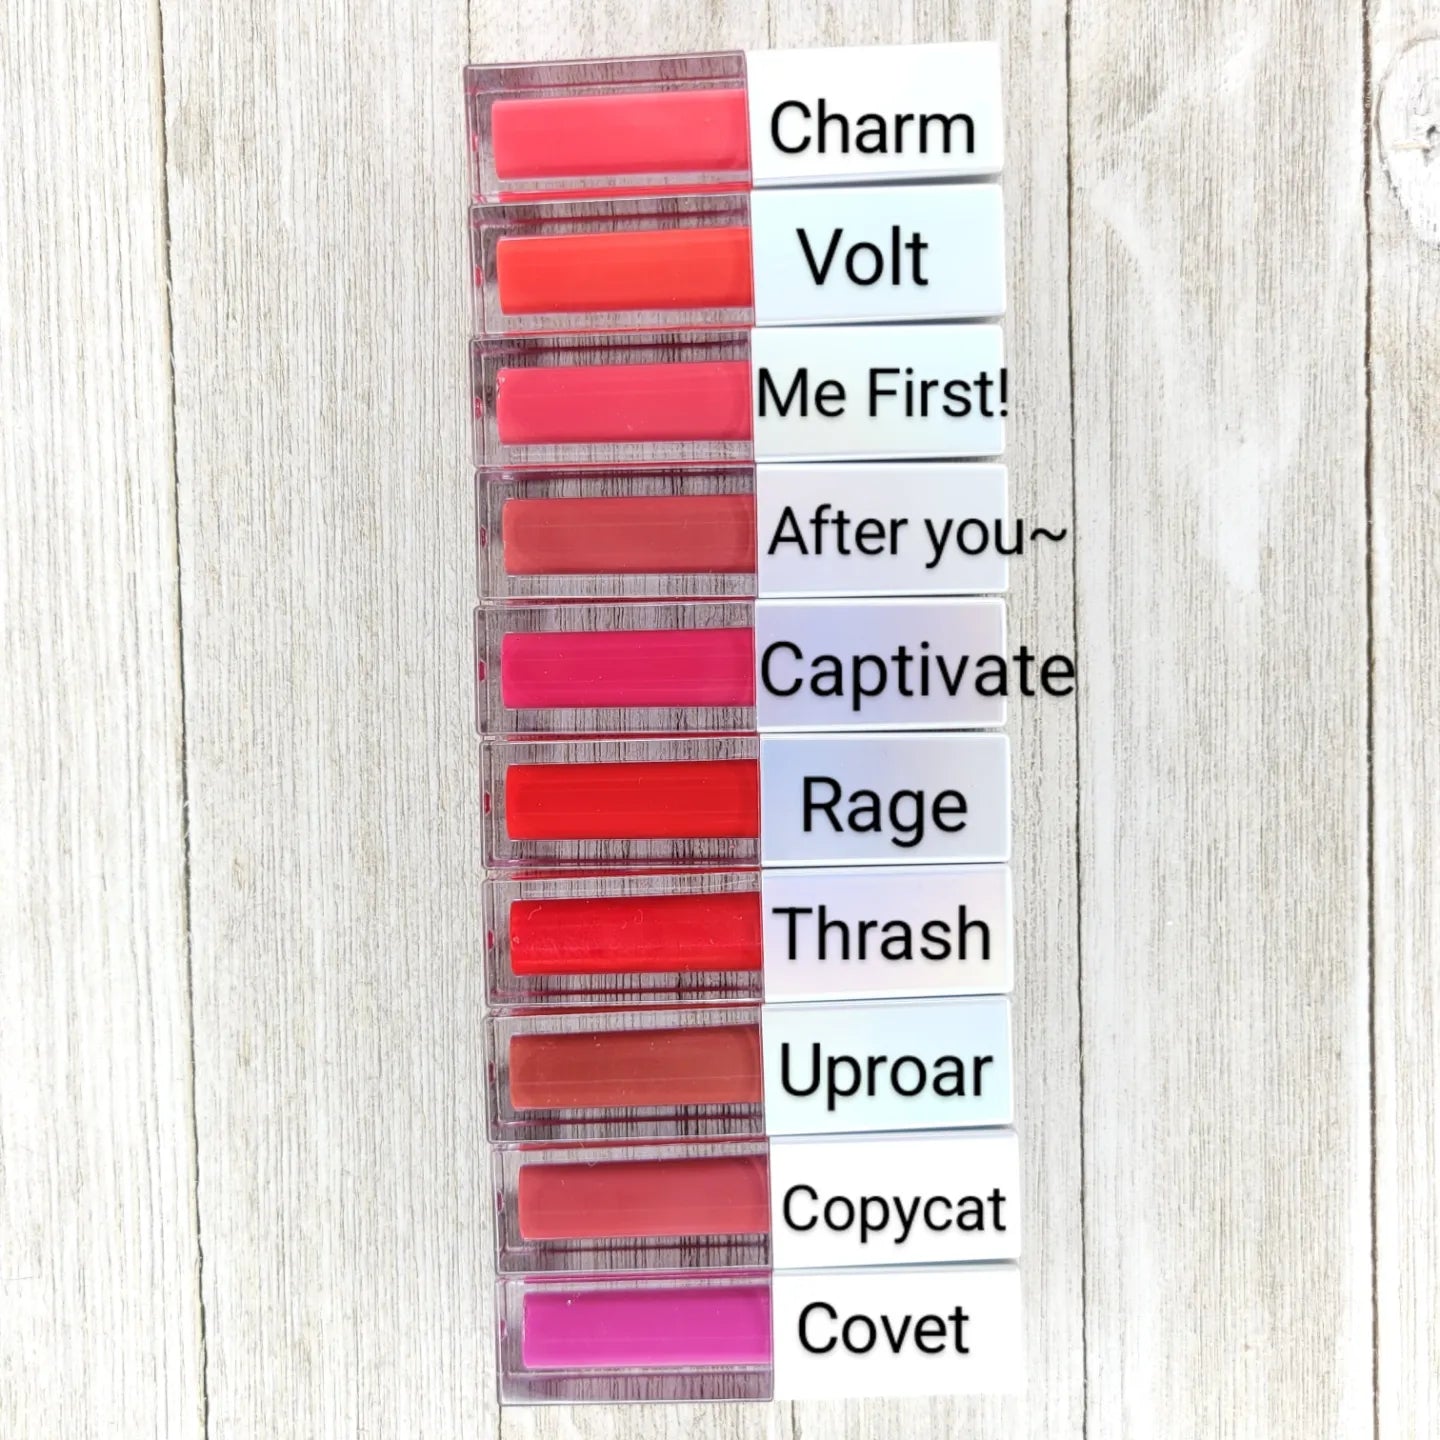 Covet - Lip Cream Violet Pink